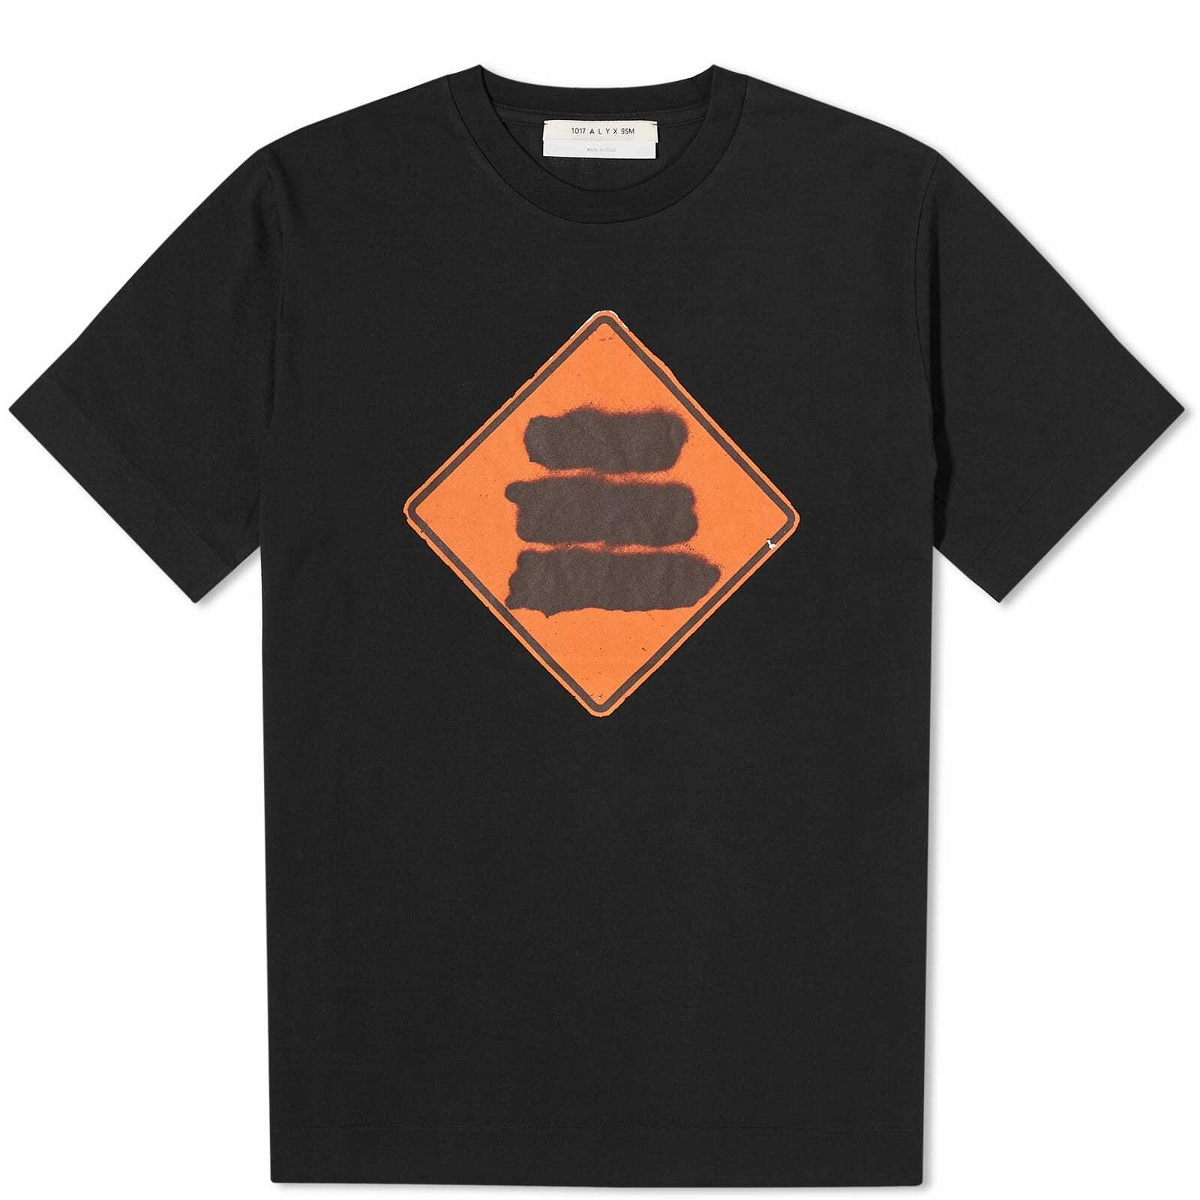 1017 ALYX 9SM Men's Mark Flood T-Shirt in Black 1017 ALYX 9SM